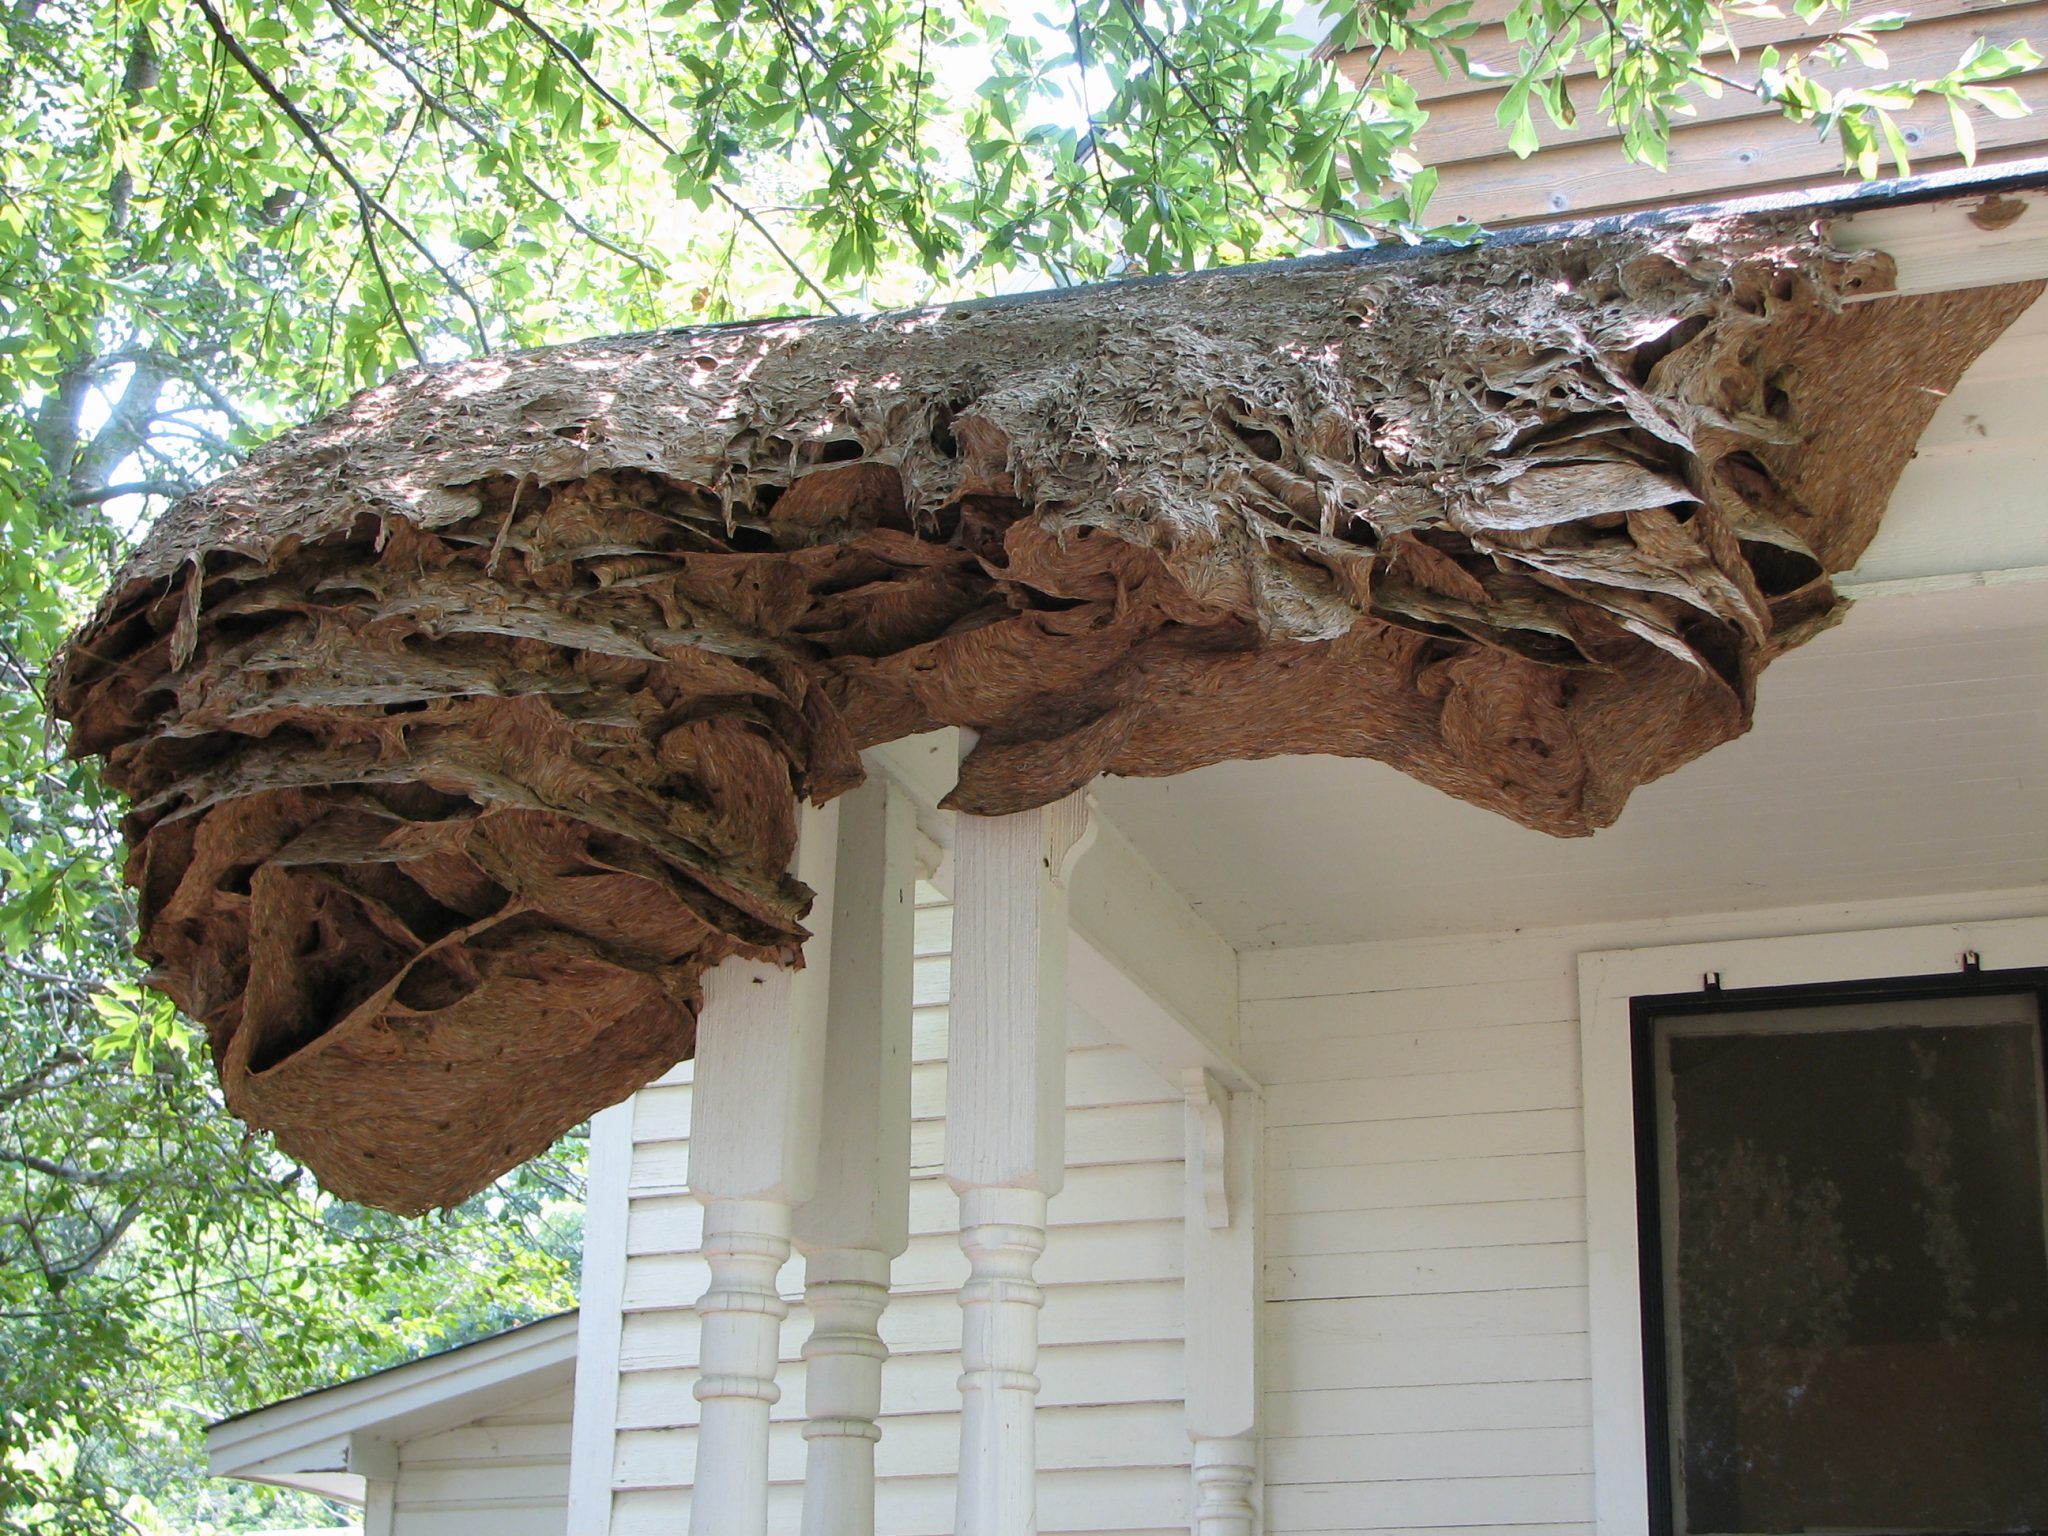 Yellow jacket wasps super nests becoming hazardous in Alabama - Strange ...